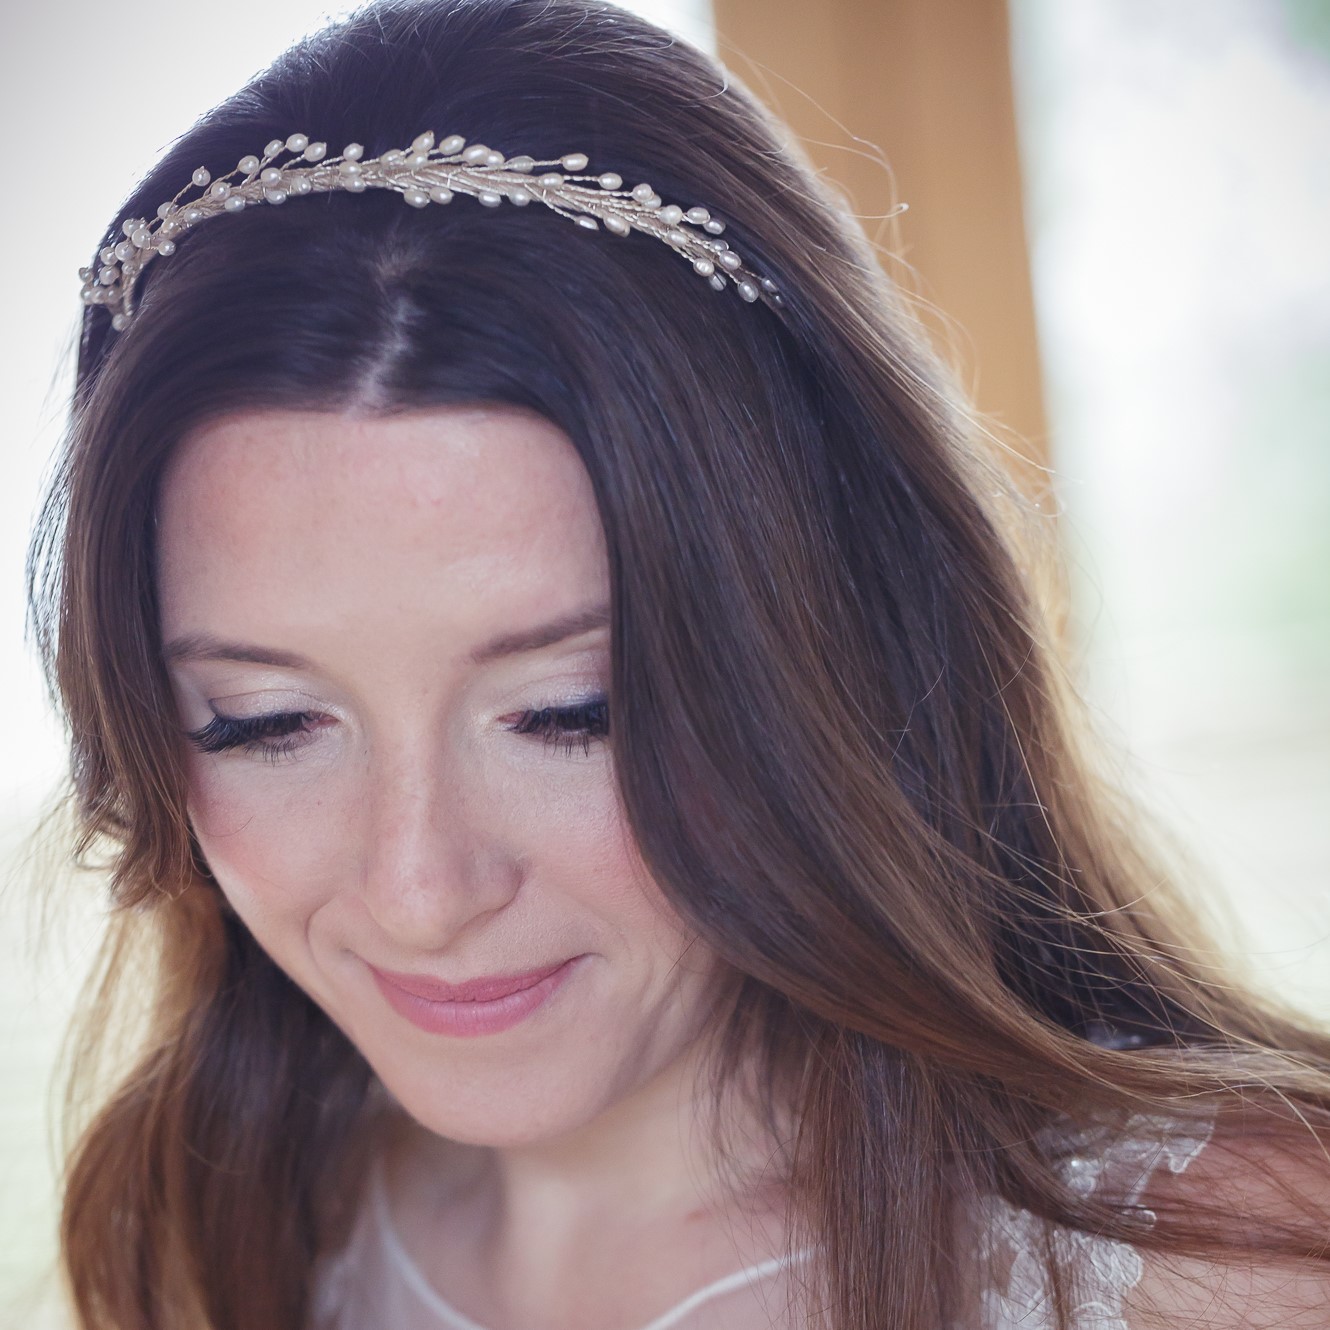 Wedding Tiara Headband Hair Accessory Odeletta With Freshwater Pearls Fiona Lucy Bespoke 